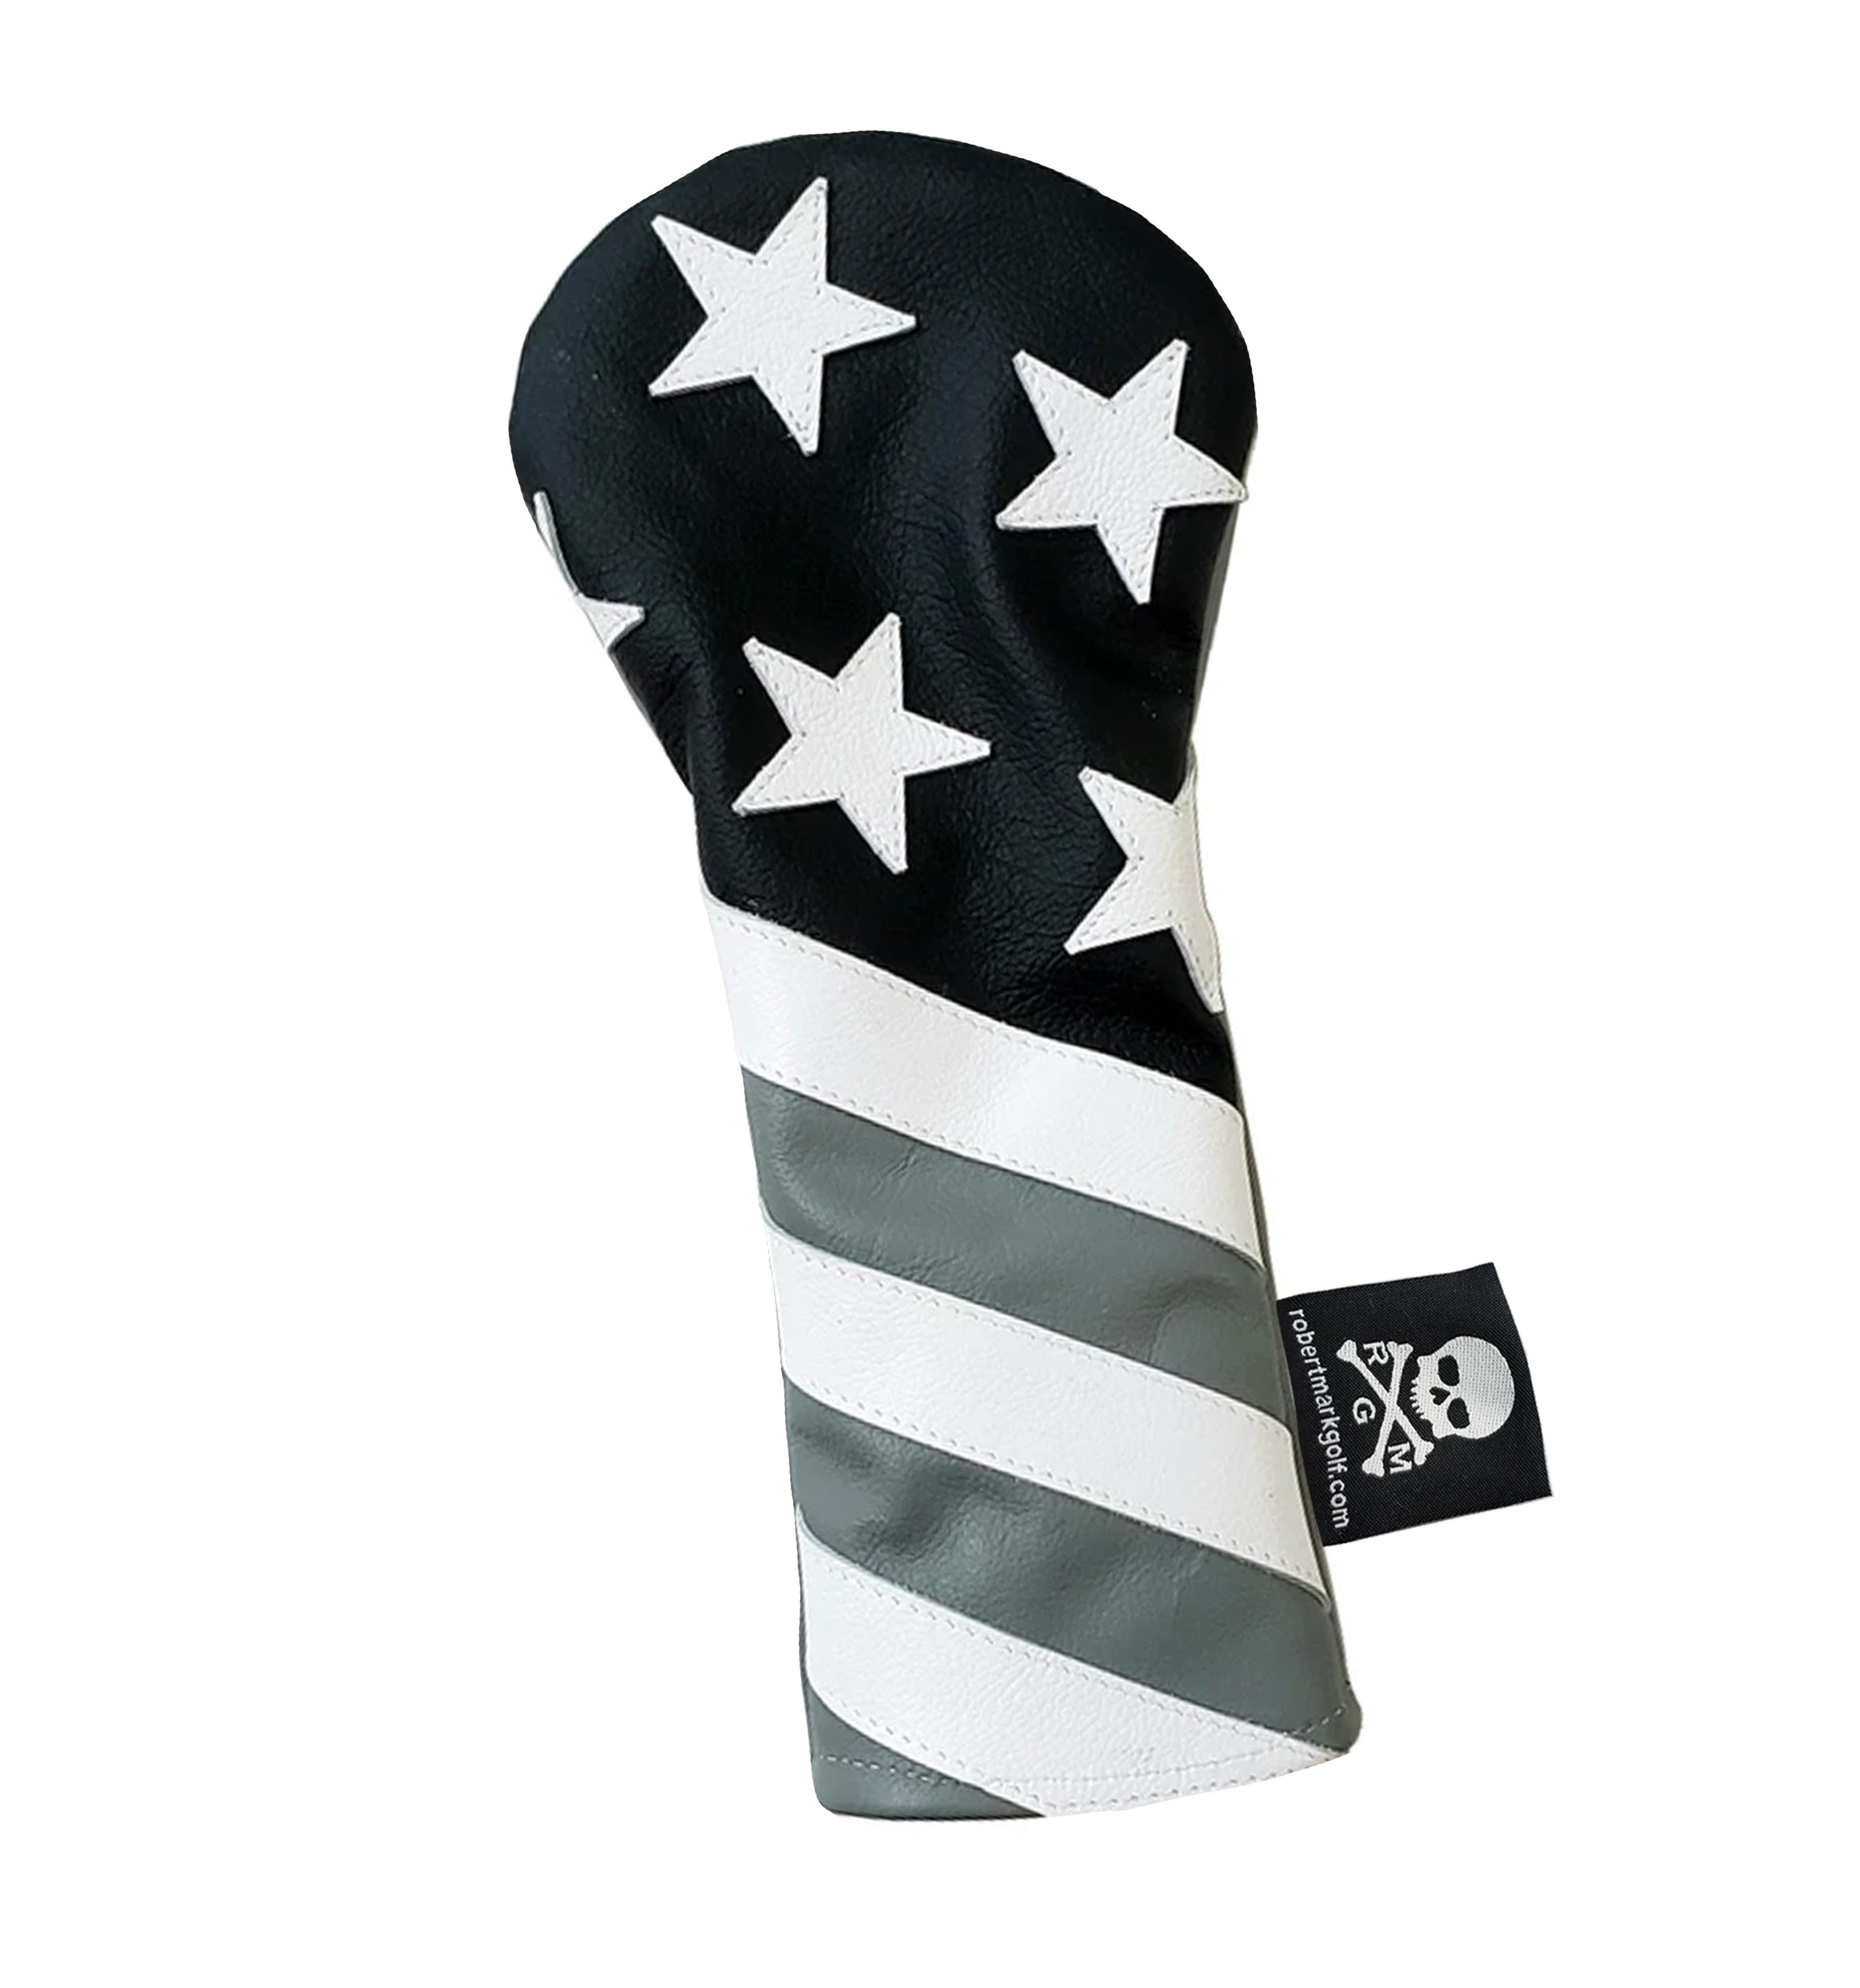 NEW! Monochromatic USA Flag Headcover - Robert Mark Golf